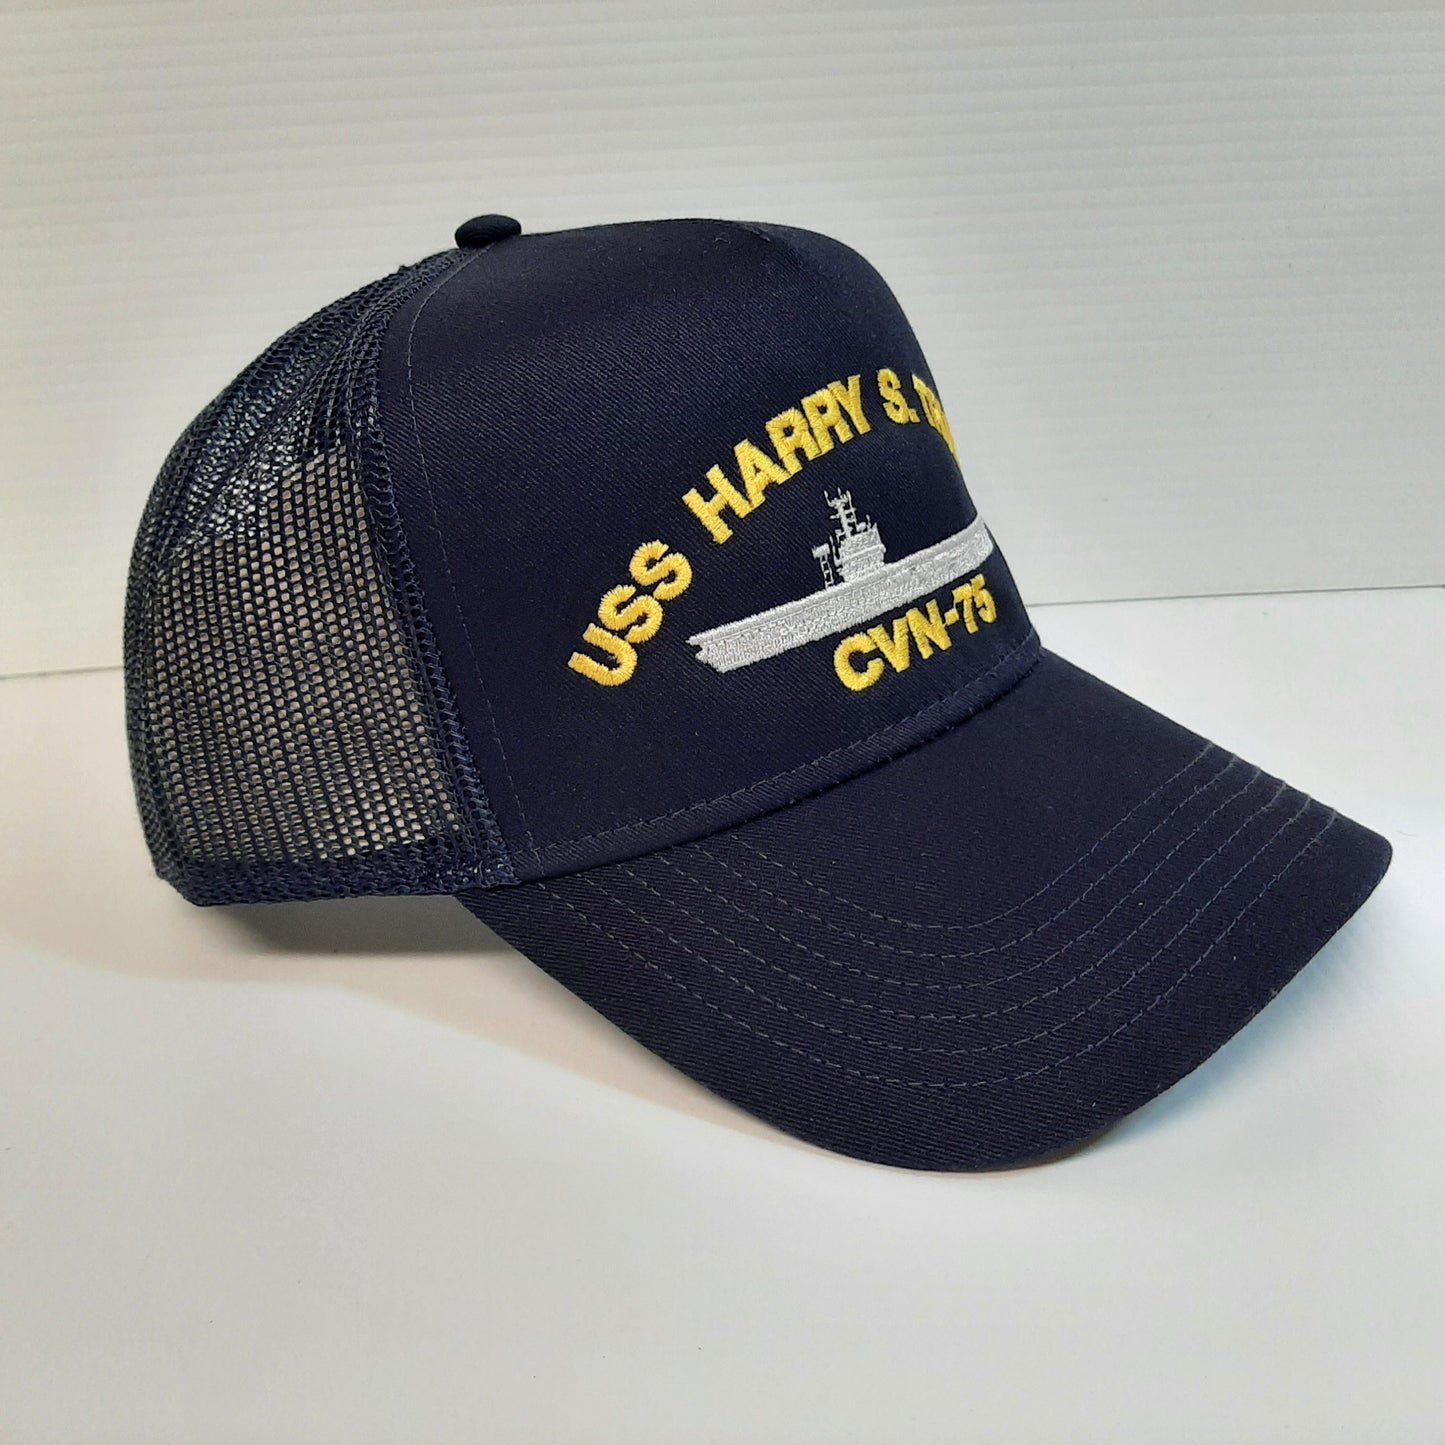 US Navy USS Harry S. Truman CVN-75 Hat Embroidered Baseball Cap Mesh Snapback